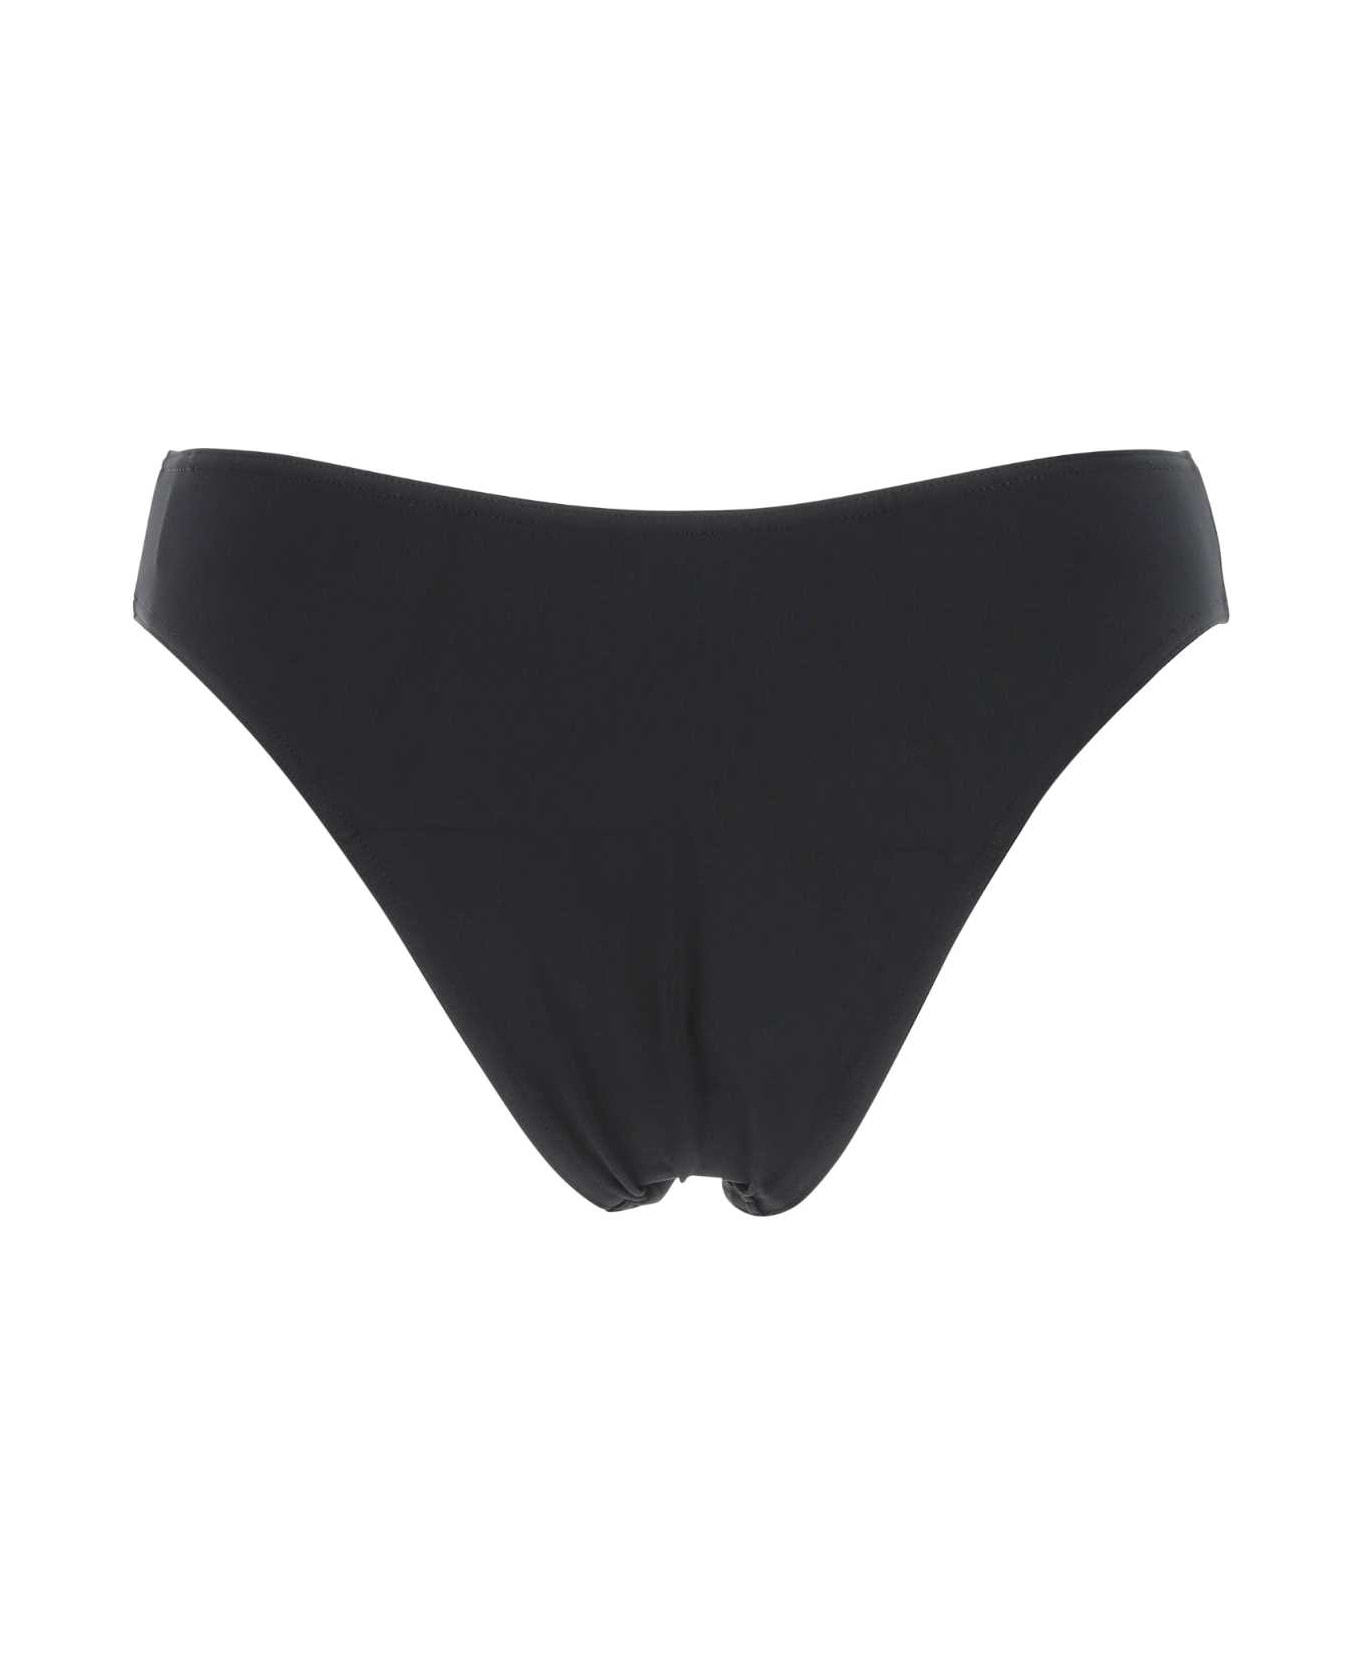 Black Stretch Nylon Bikini Bottom - 2